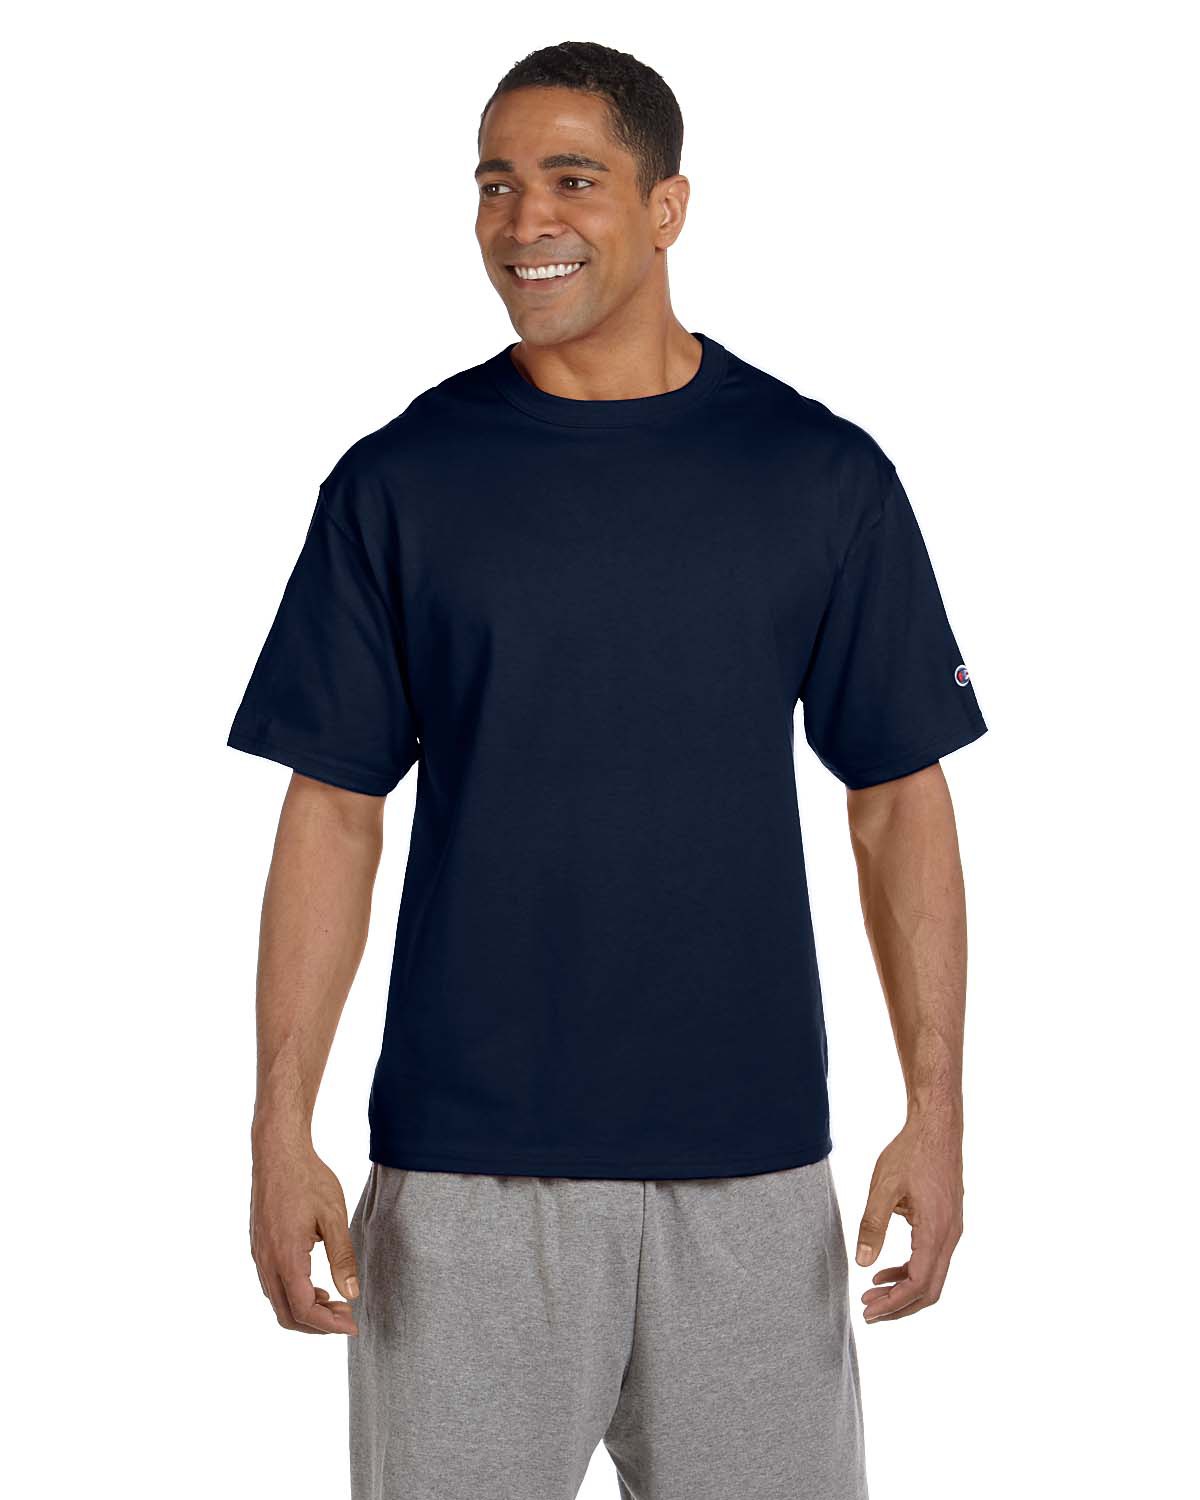 T2102 Champion Adult 7 oz. Heritage Jersey T-Shirt